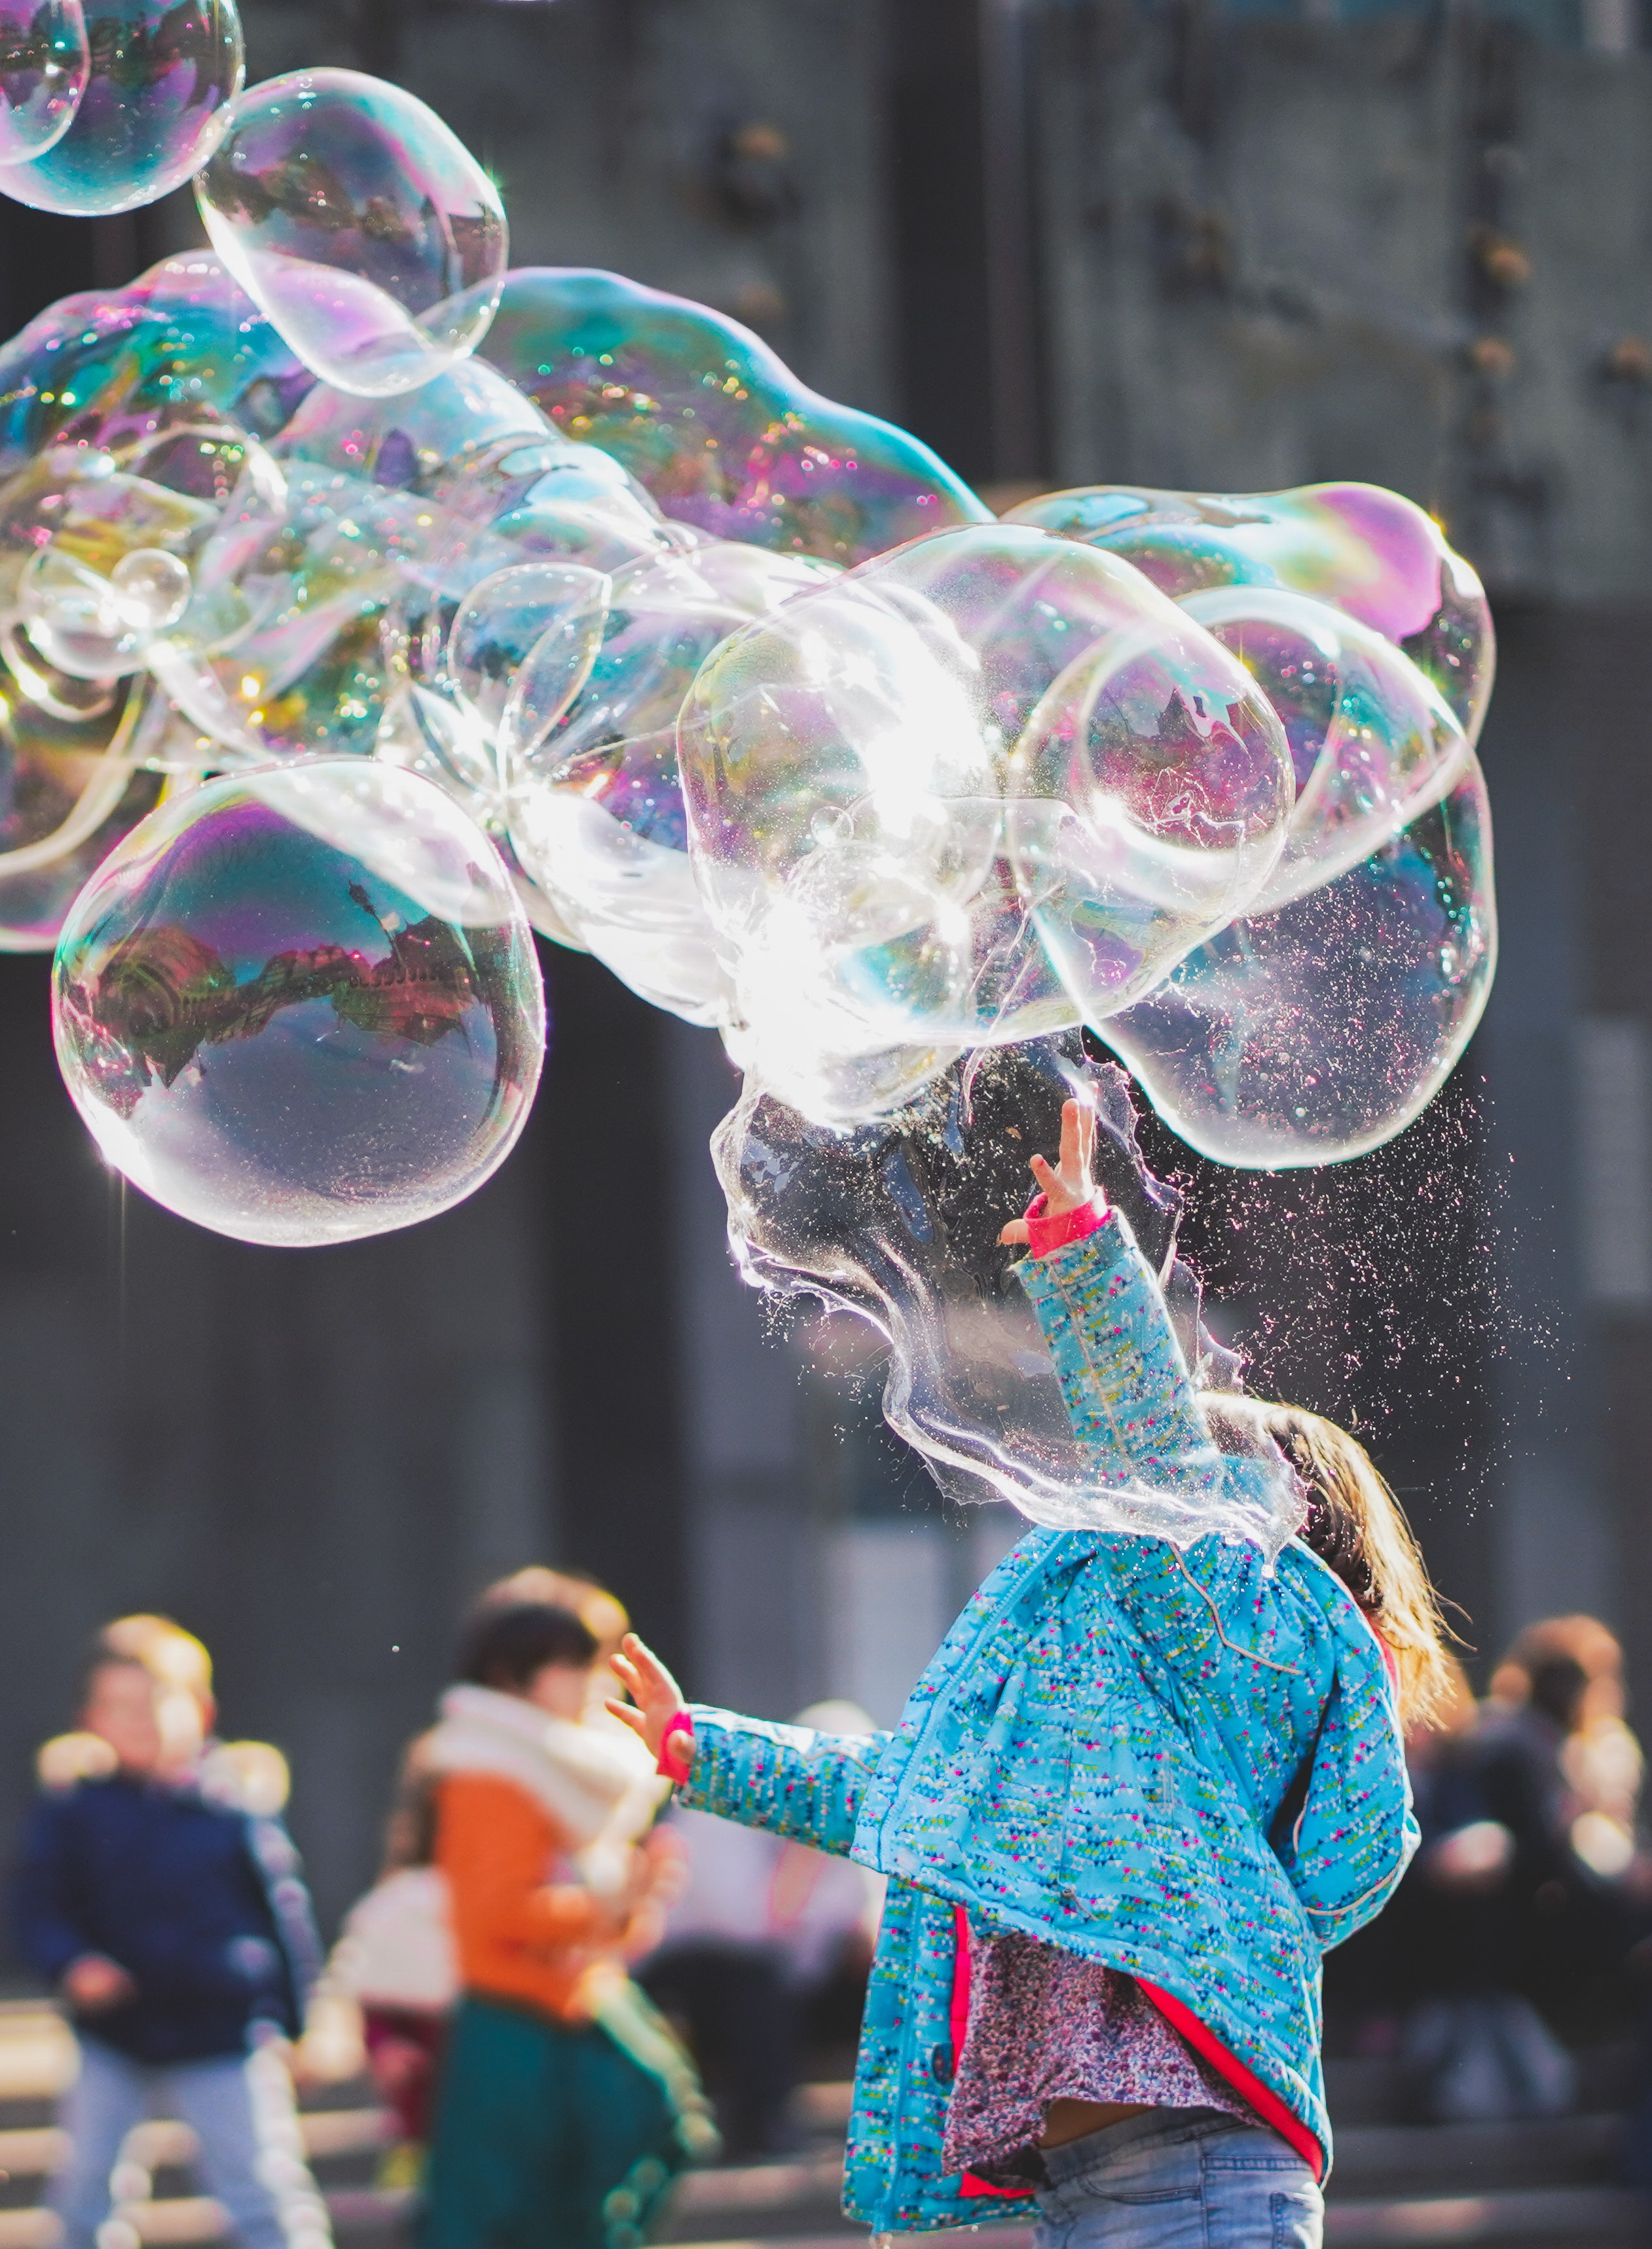 Child reaches for bubbles